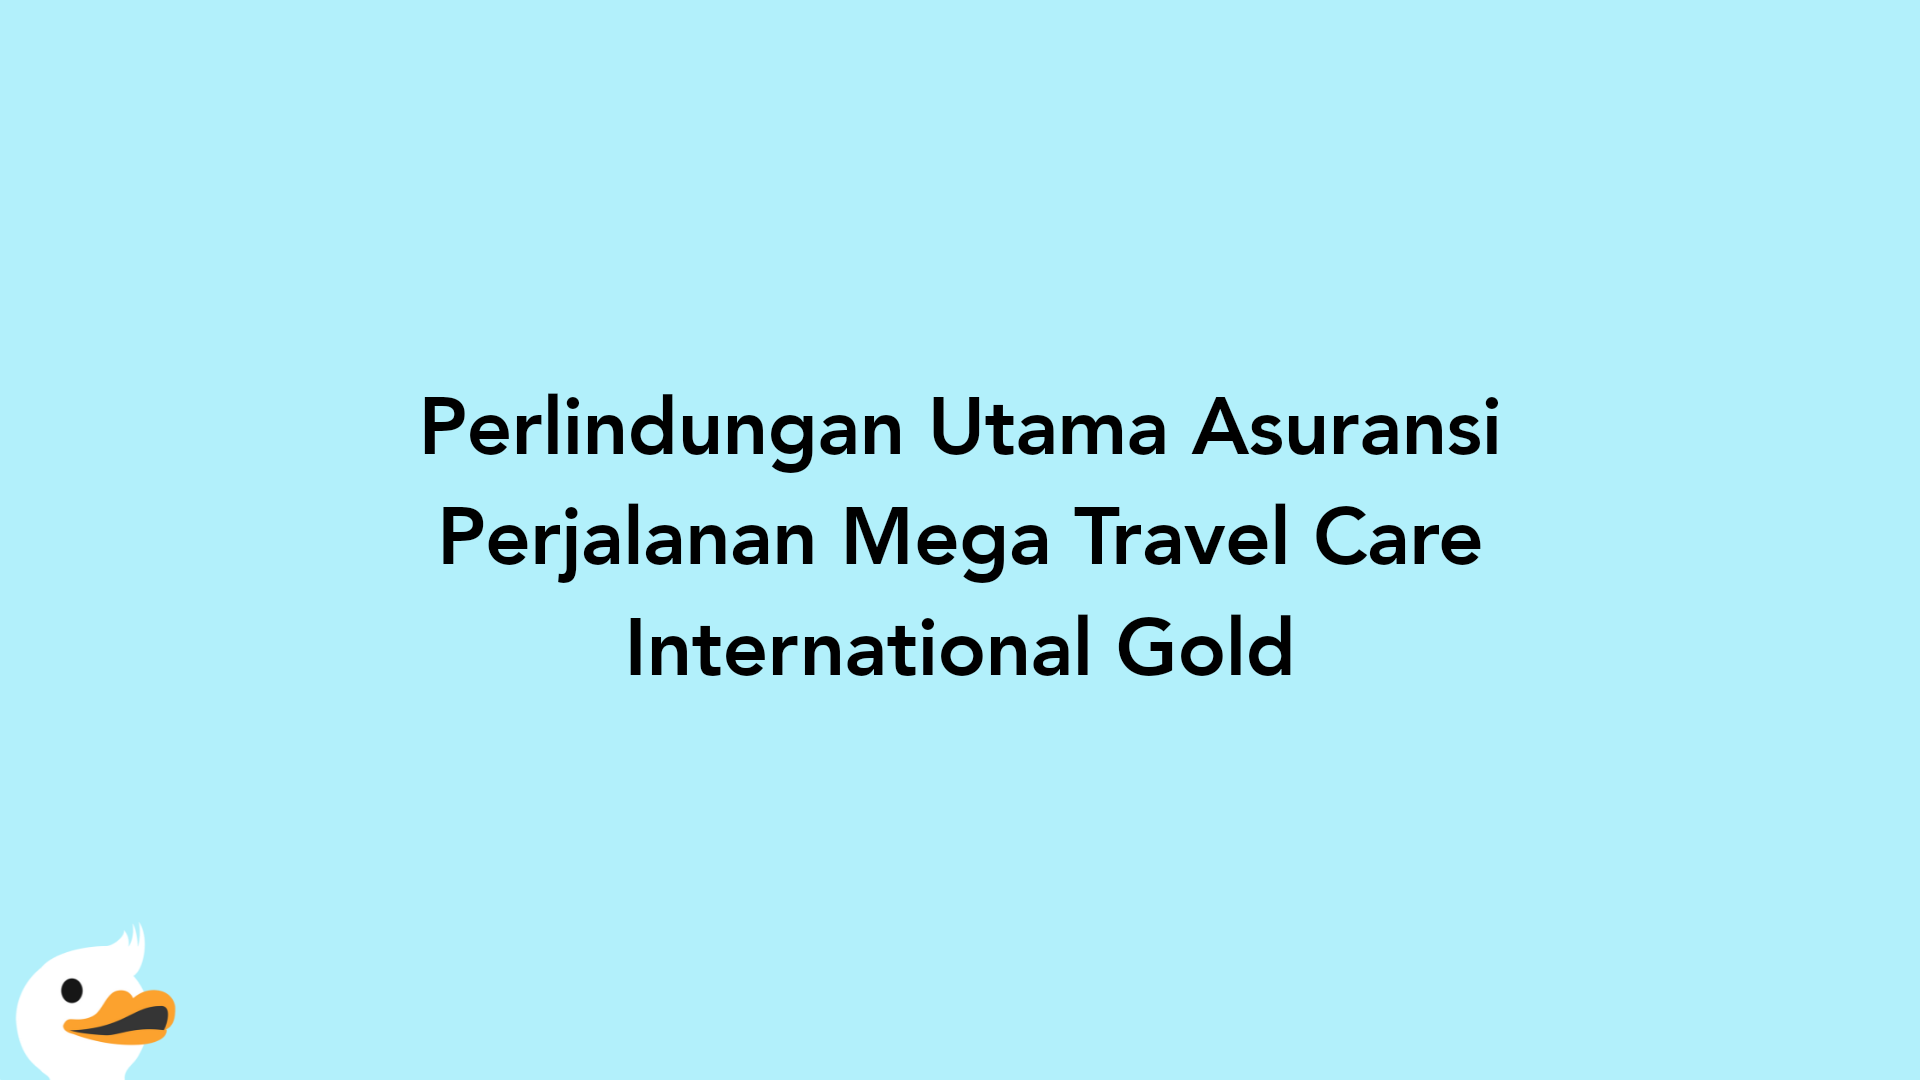 Perlindungan Utama Asuransi Perjalanan Mega Travel Care International Gold